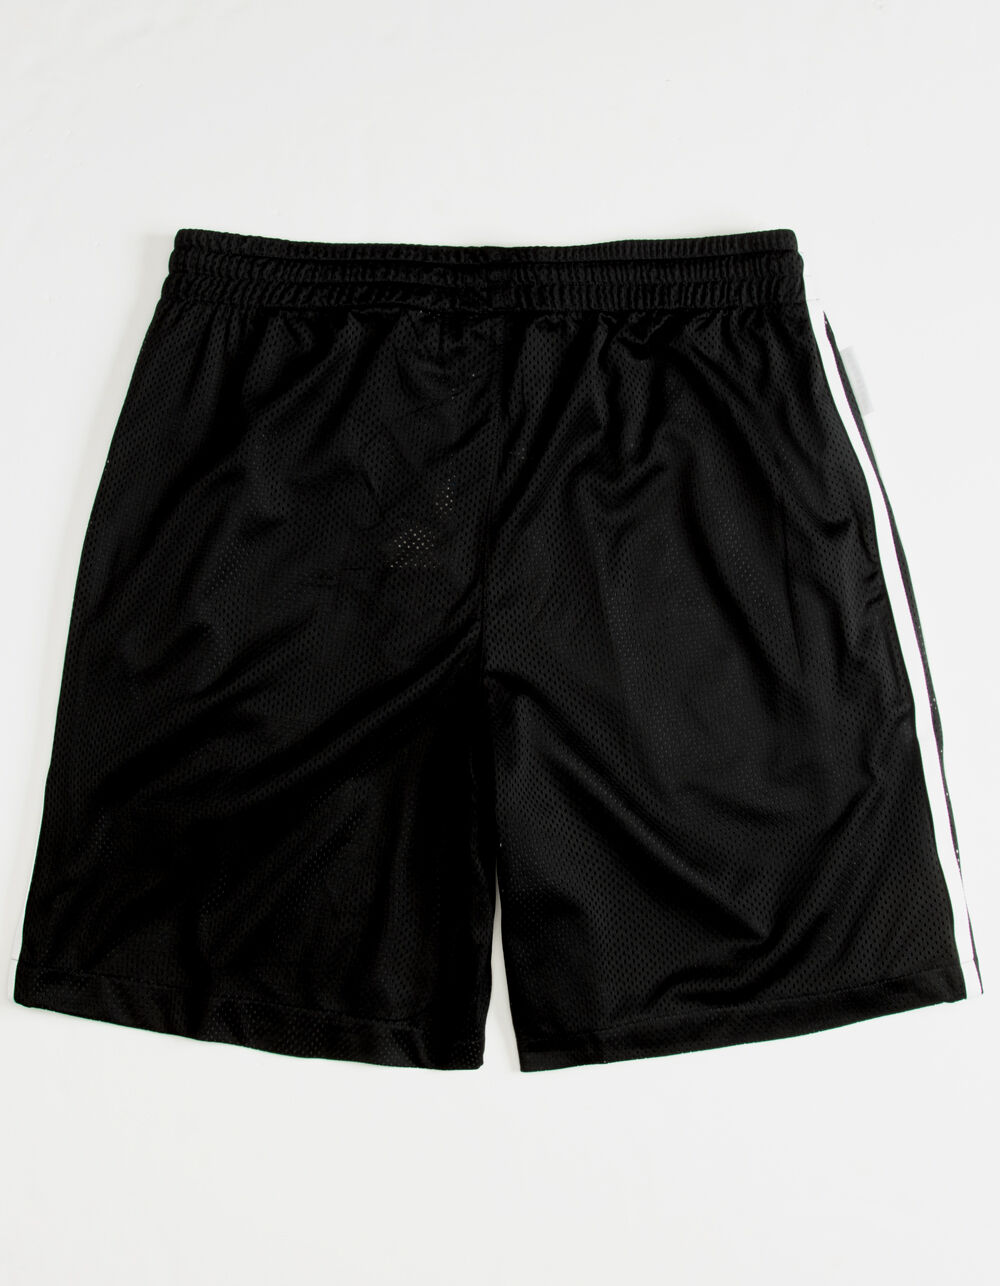 ADIDAS Mens Basketball Shorts - BLACK | Tillys